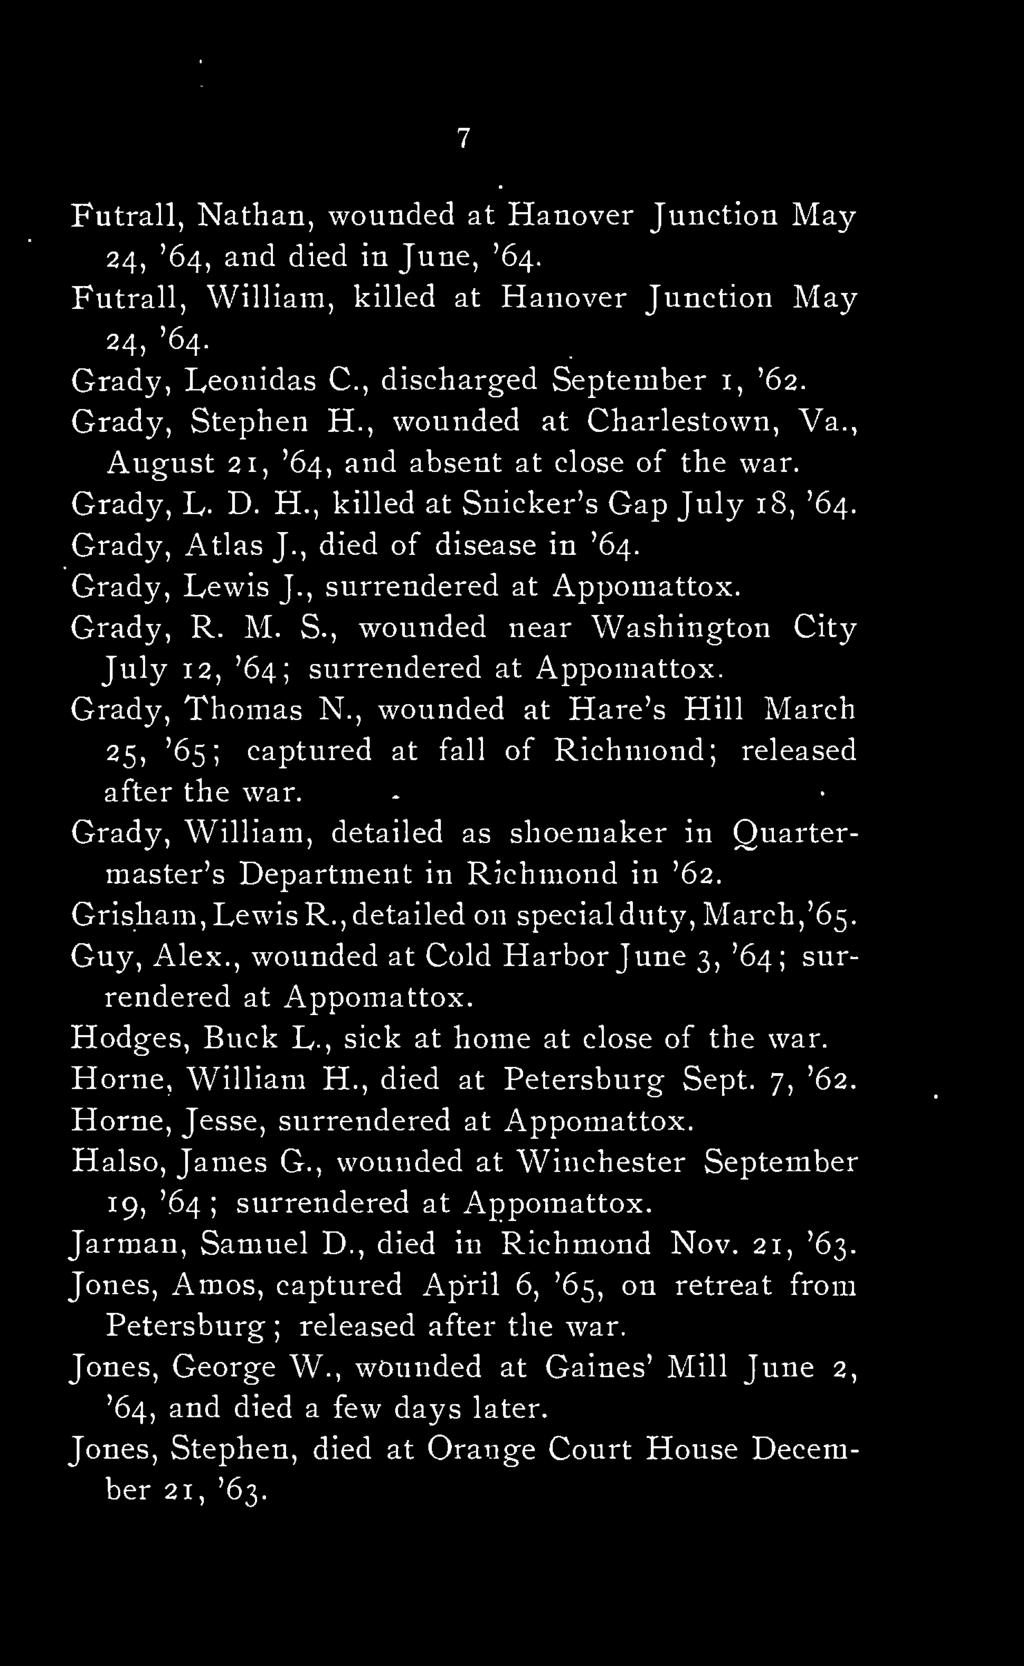 Grady, "Lewis J., surrendered at Appomattox. Grady, R. M. S., wounded near Washington City July 12, '64 surrendered at Appomattox. Grady, Thomas N.